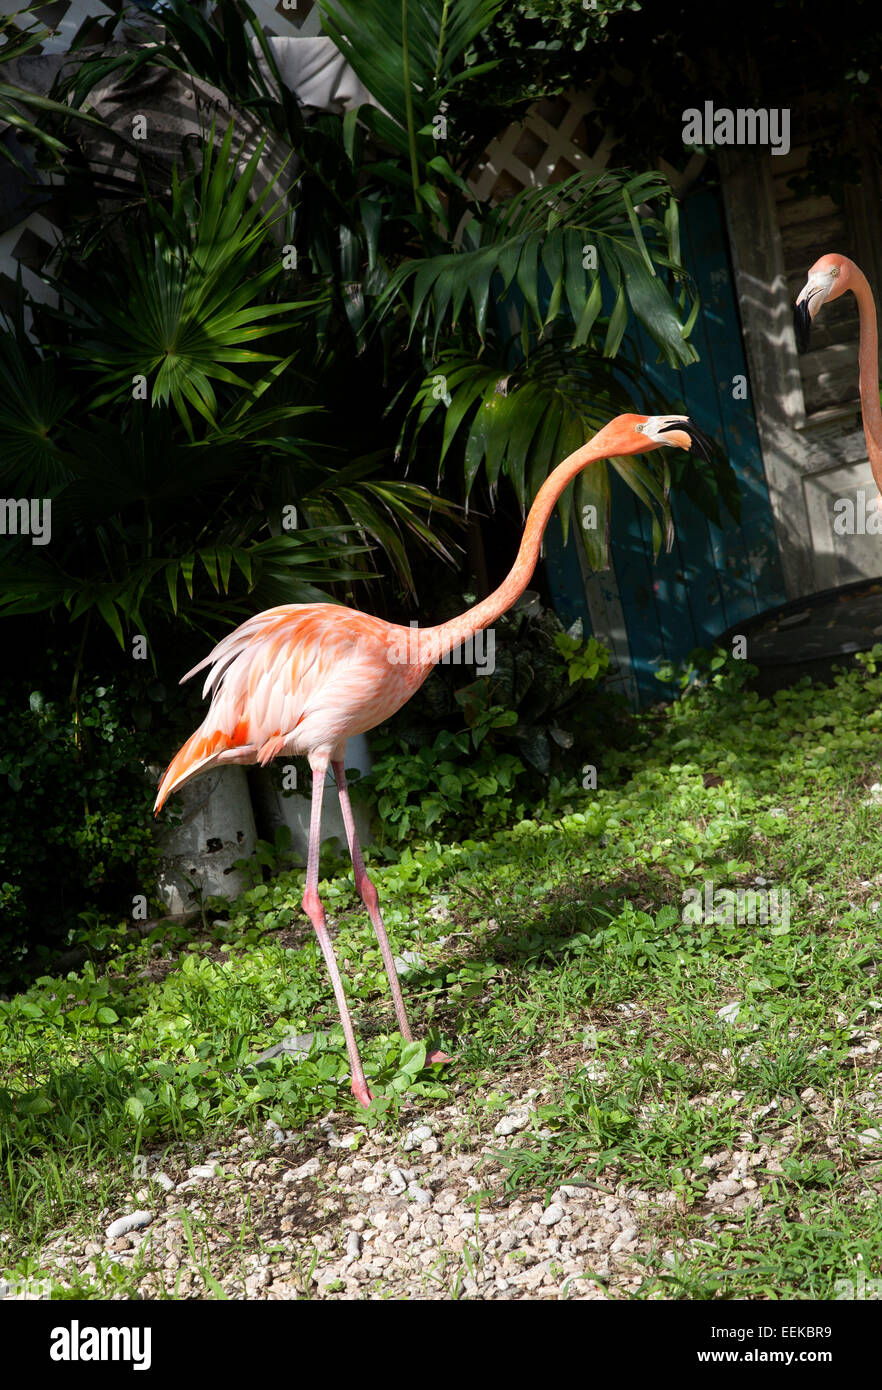 Flamingo squawking, seen on the island of Bonaire. Stock Photo